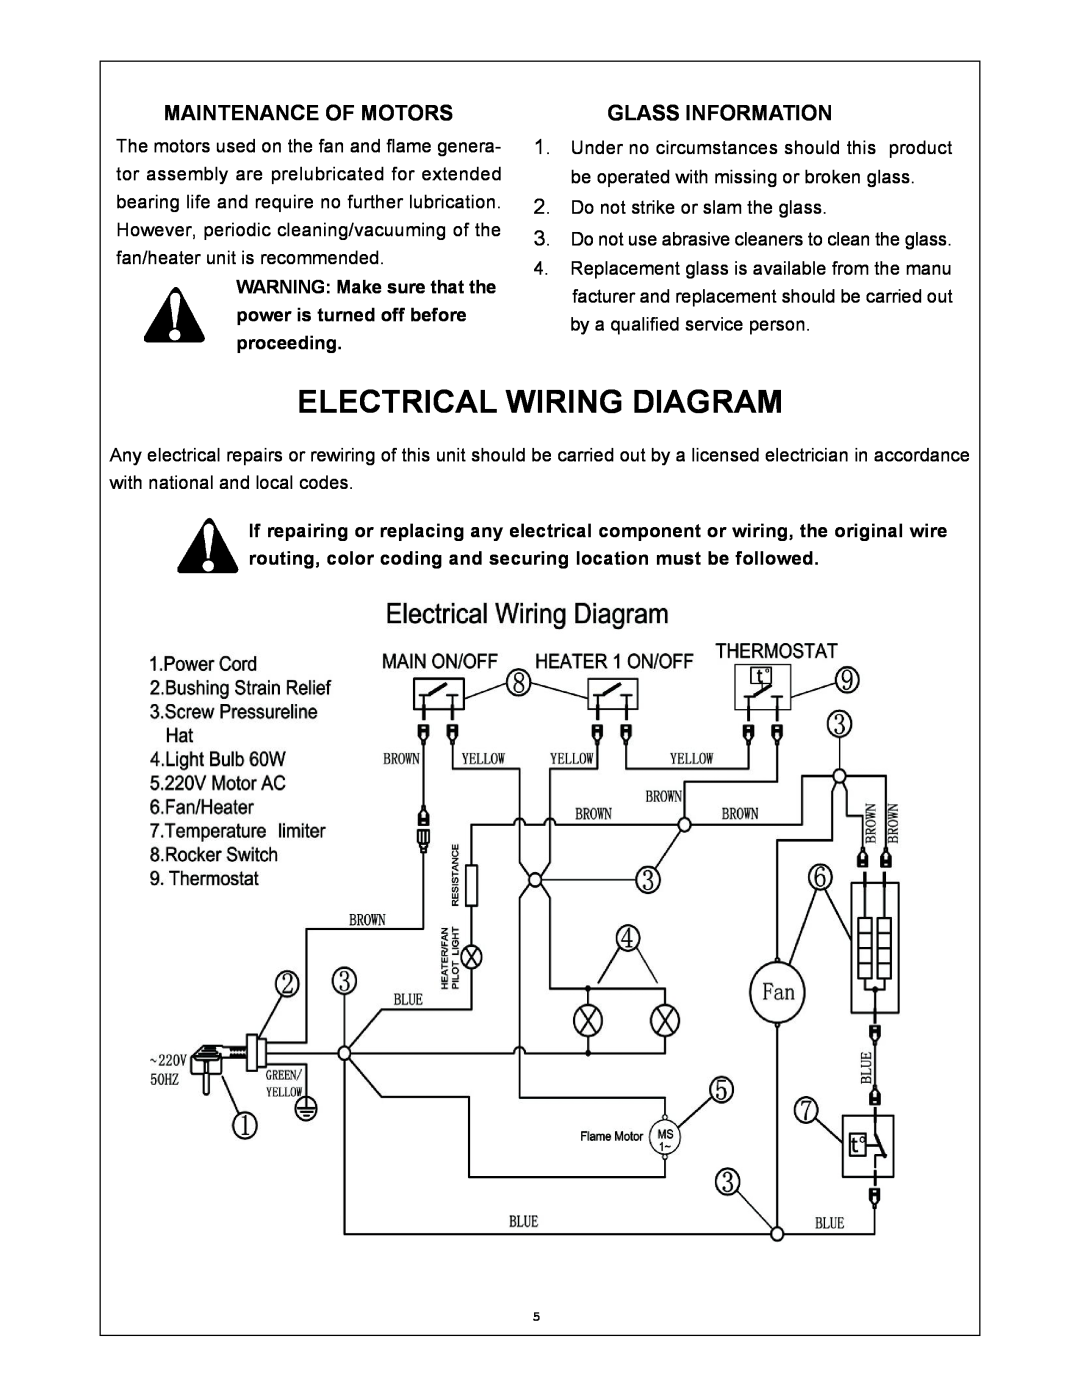 Procom V50TYLAR-BC, V50TYLA-DO, V50TYLA-C, V50TYLA-O Electrical Wiring Diagram, Maintenance Of Motors, Glass Information 